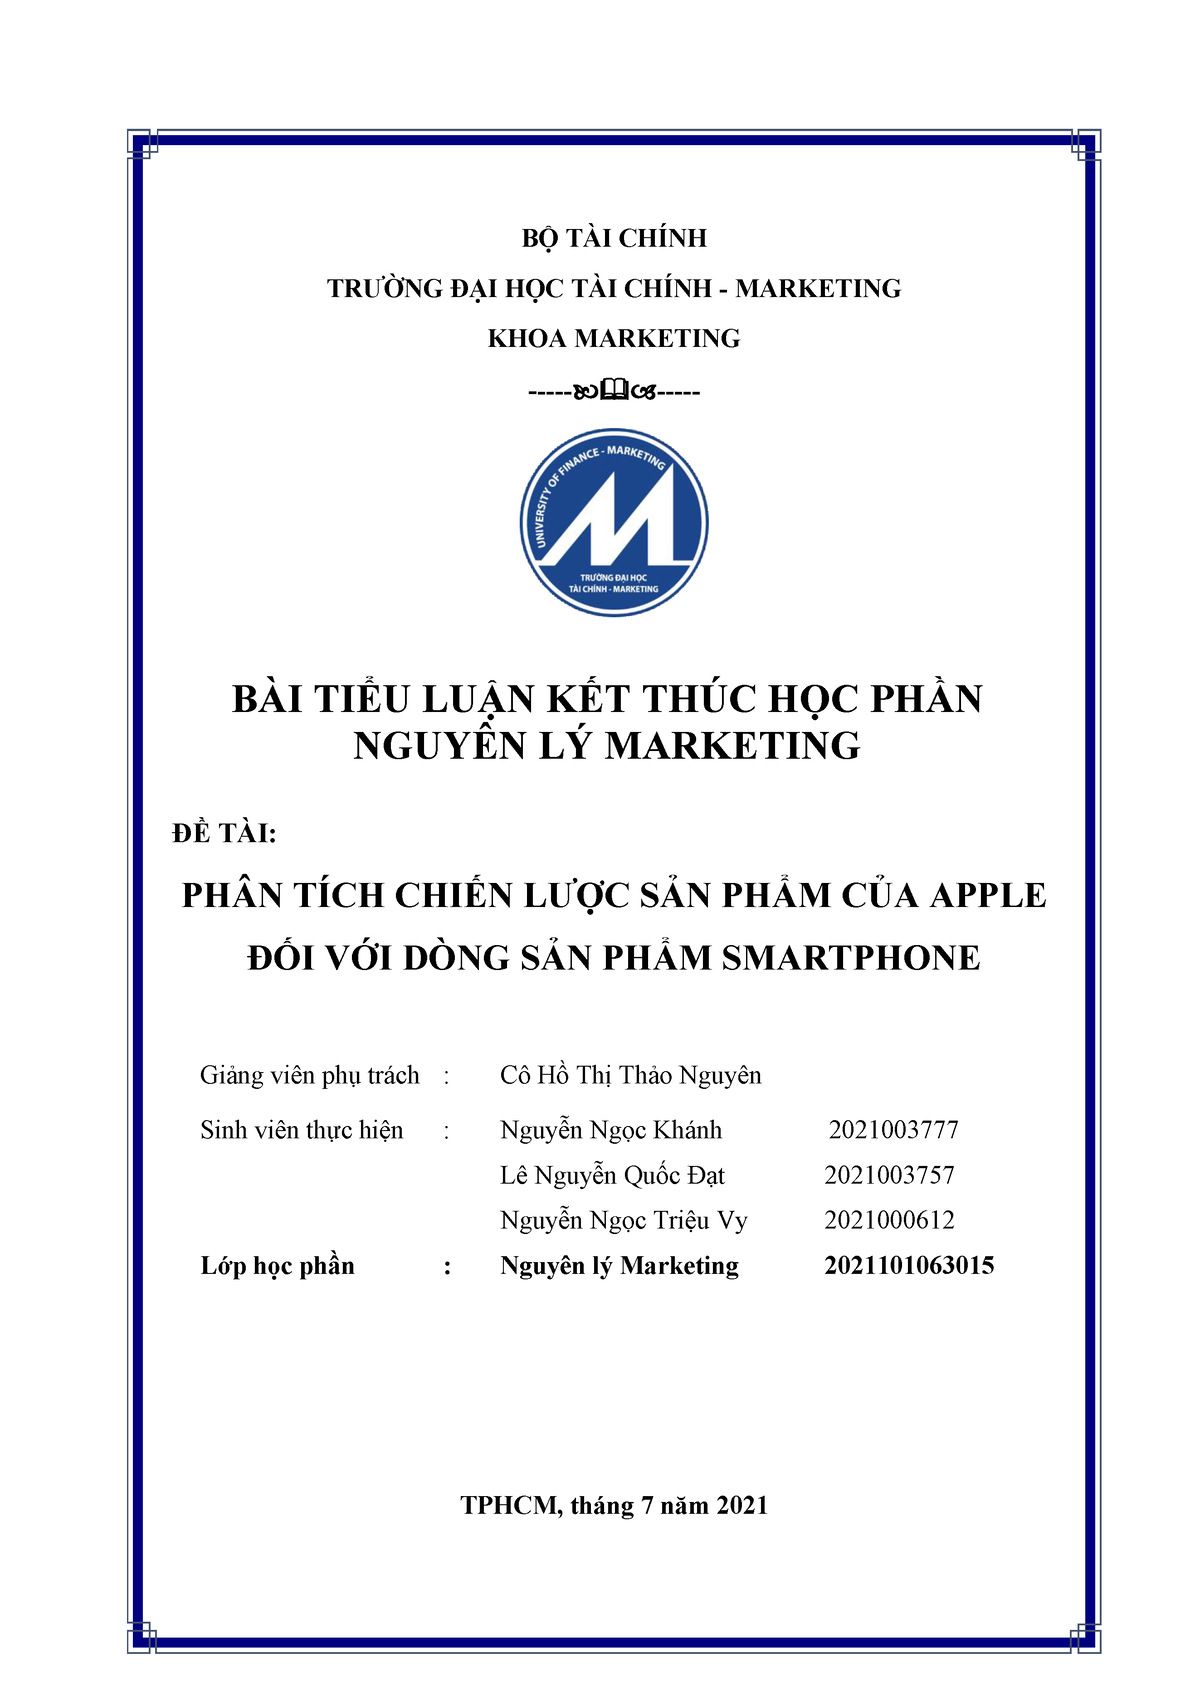 NLM Product Phan tich chien luoc san pham cua Apple doi voi dong san pham smartphone - BỘ TÀI CHÍNH - Studocu